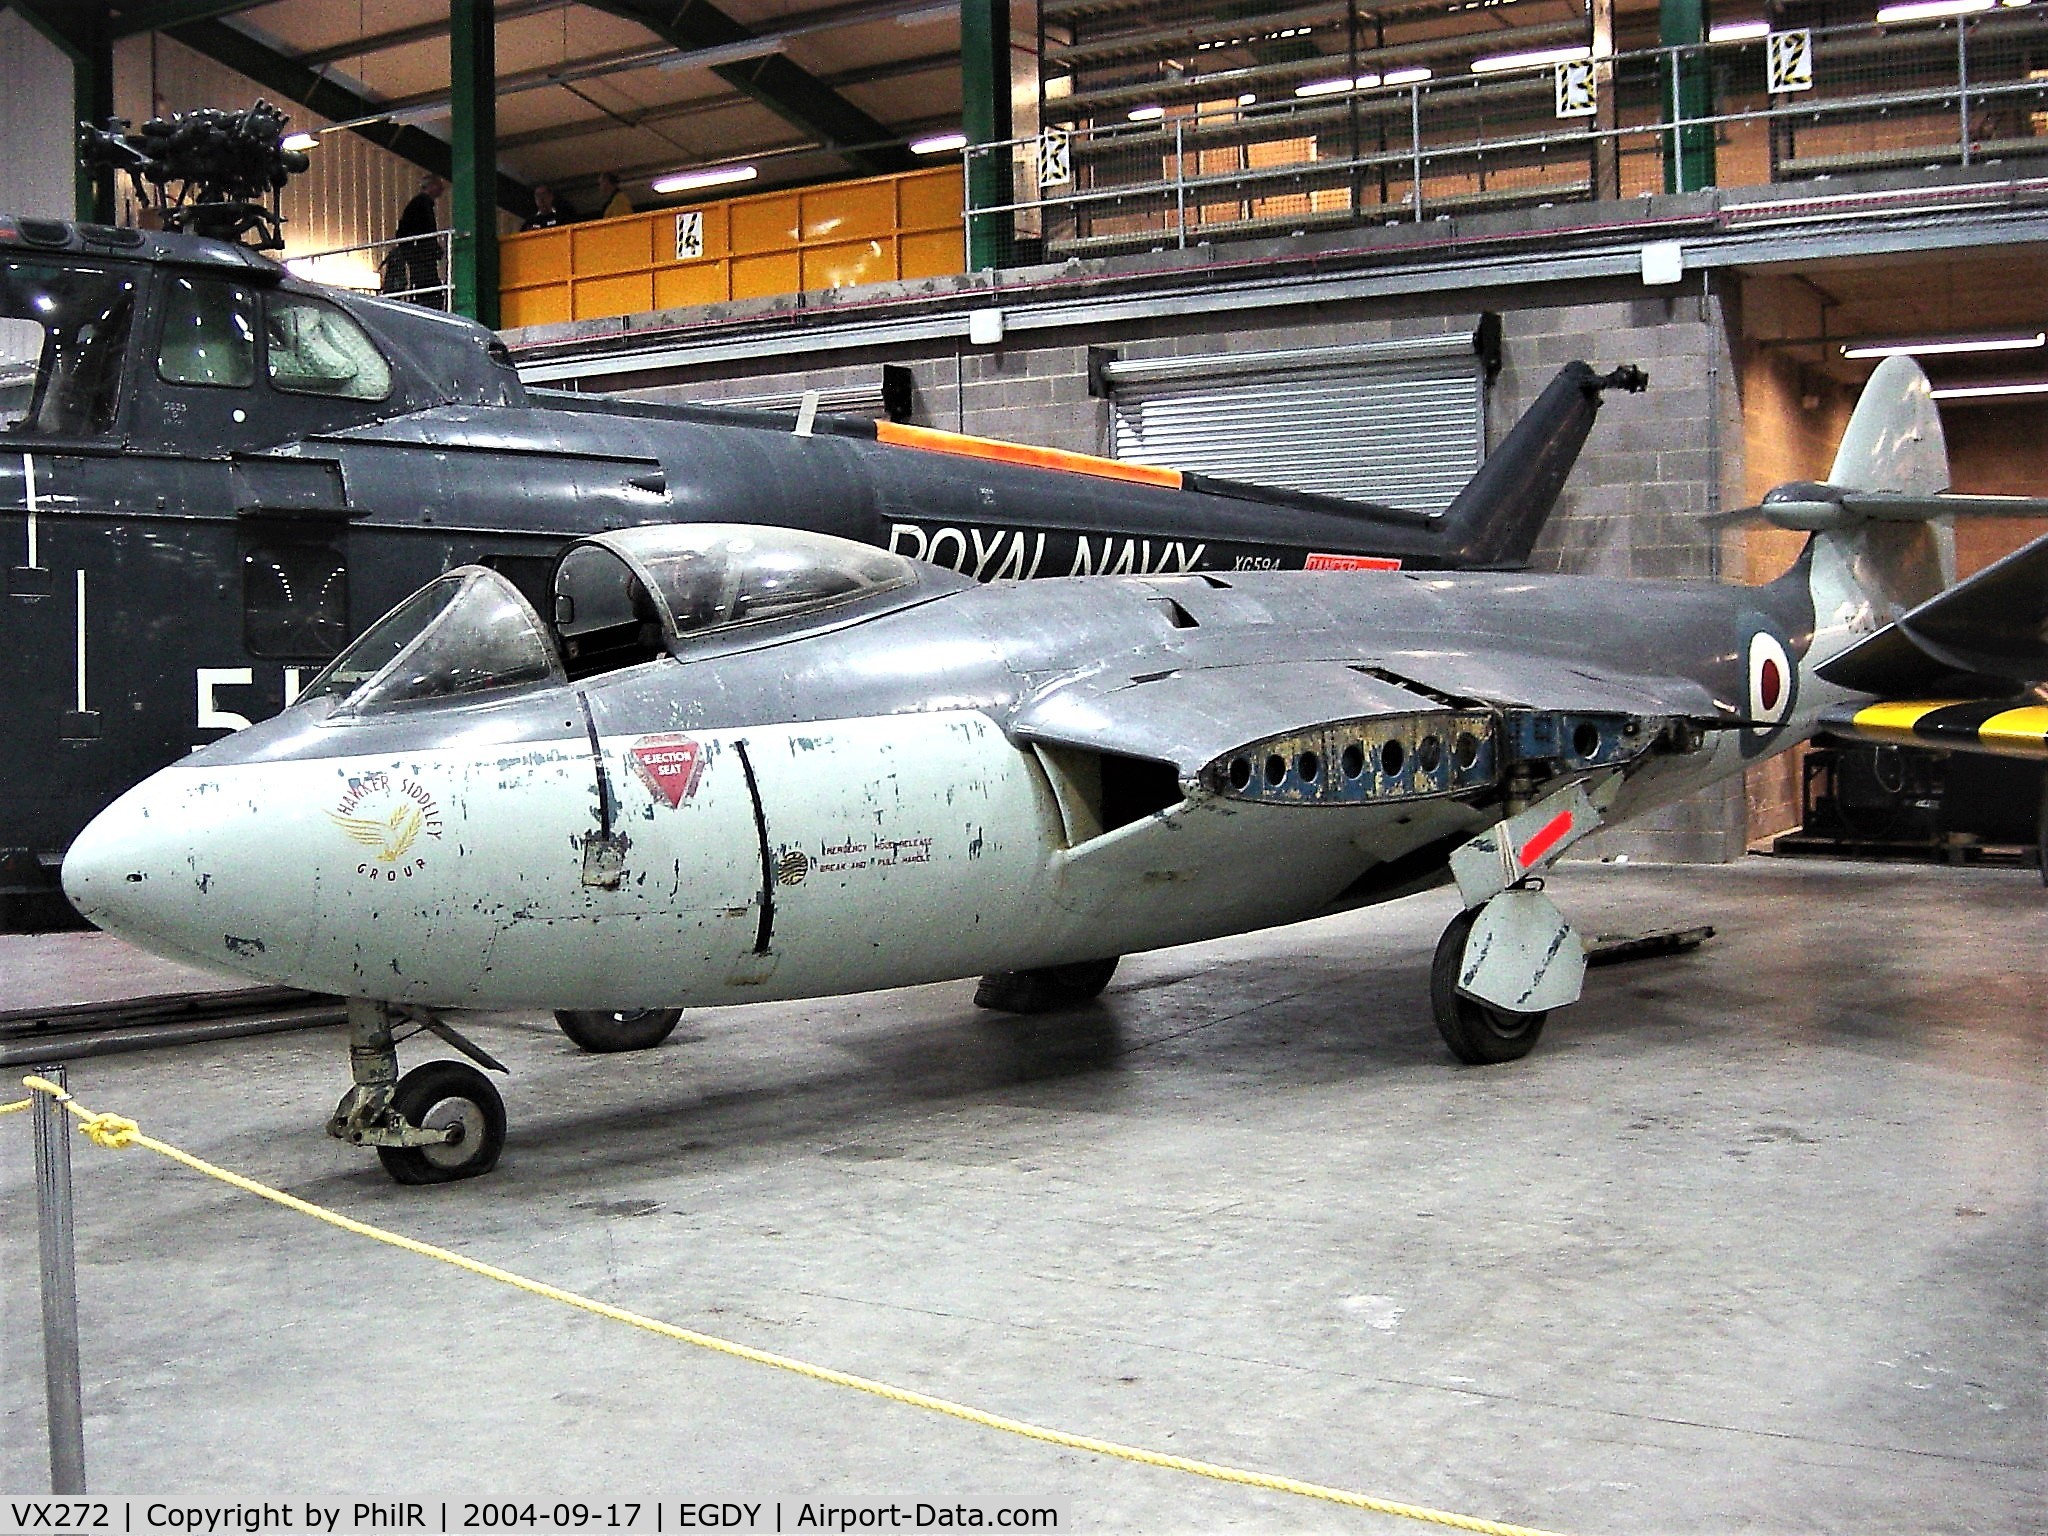 VX272, 1948 Hawker P.1052 C/N Not found VX272, 1948 Royal Navy Hawker P1052 VX272 Yeovilton